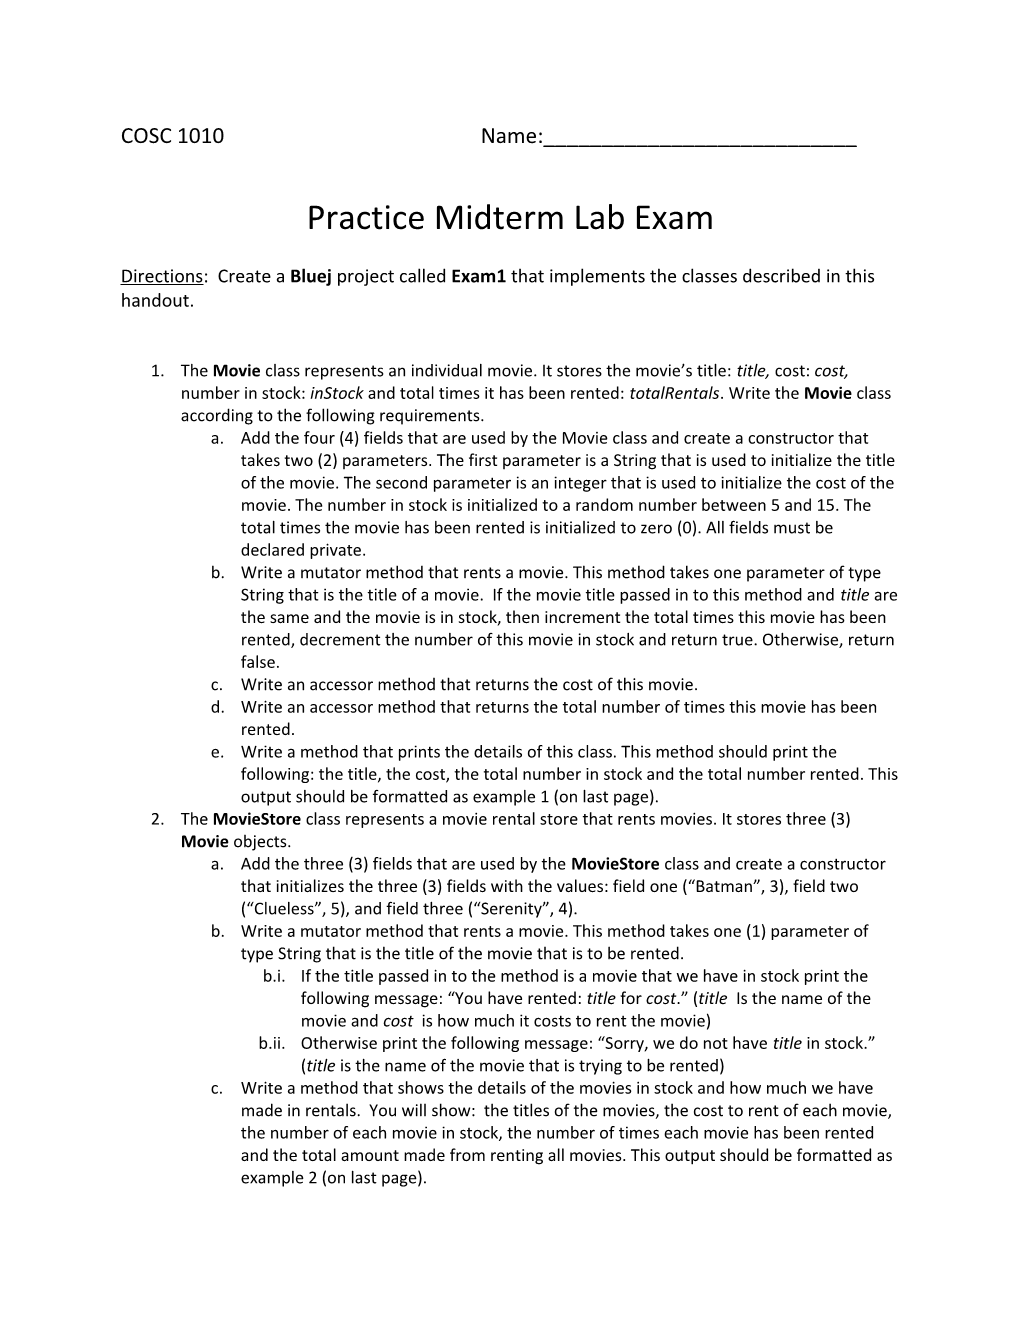 Practice Midterm Lab Exam